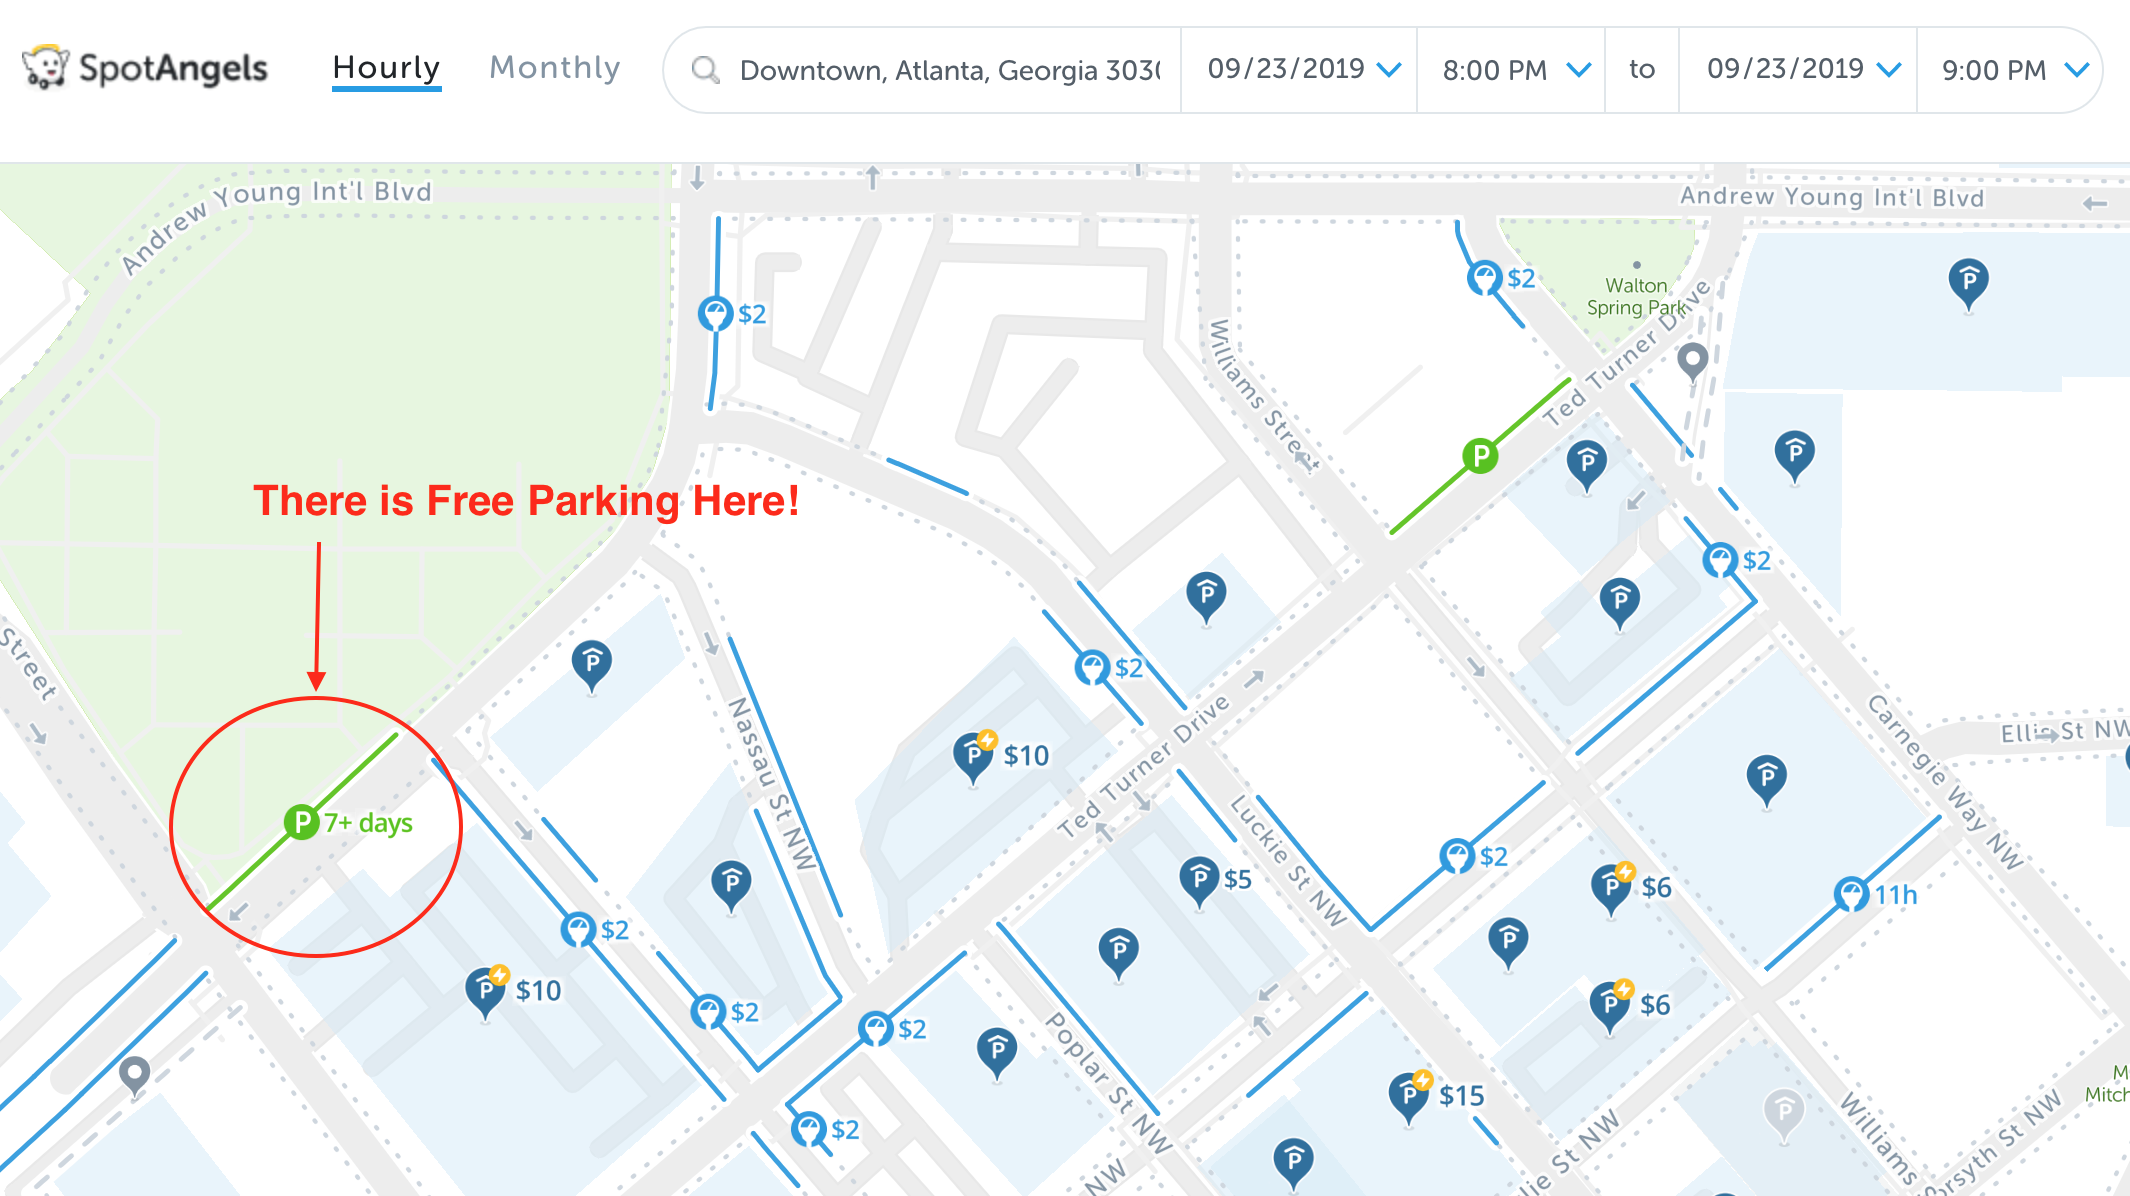 map of free parking in Atlanta - SpotAngels